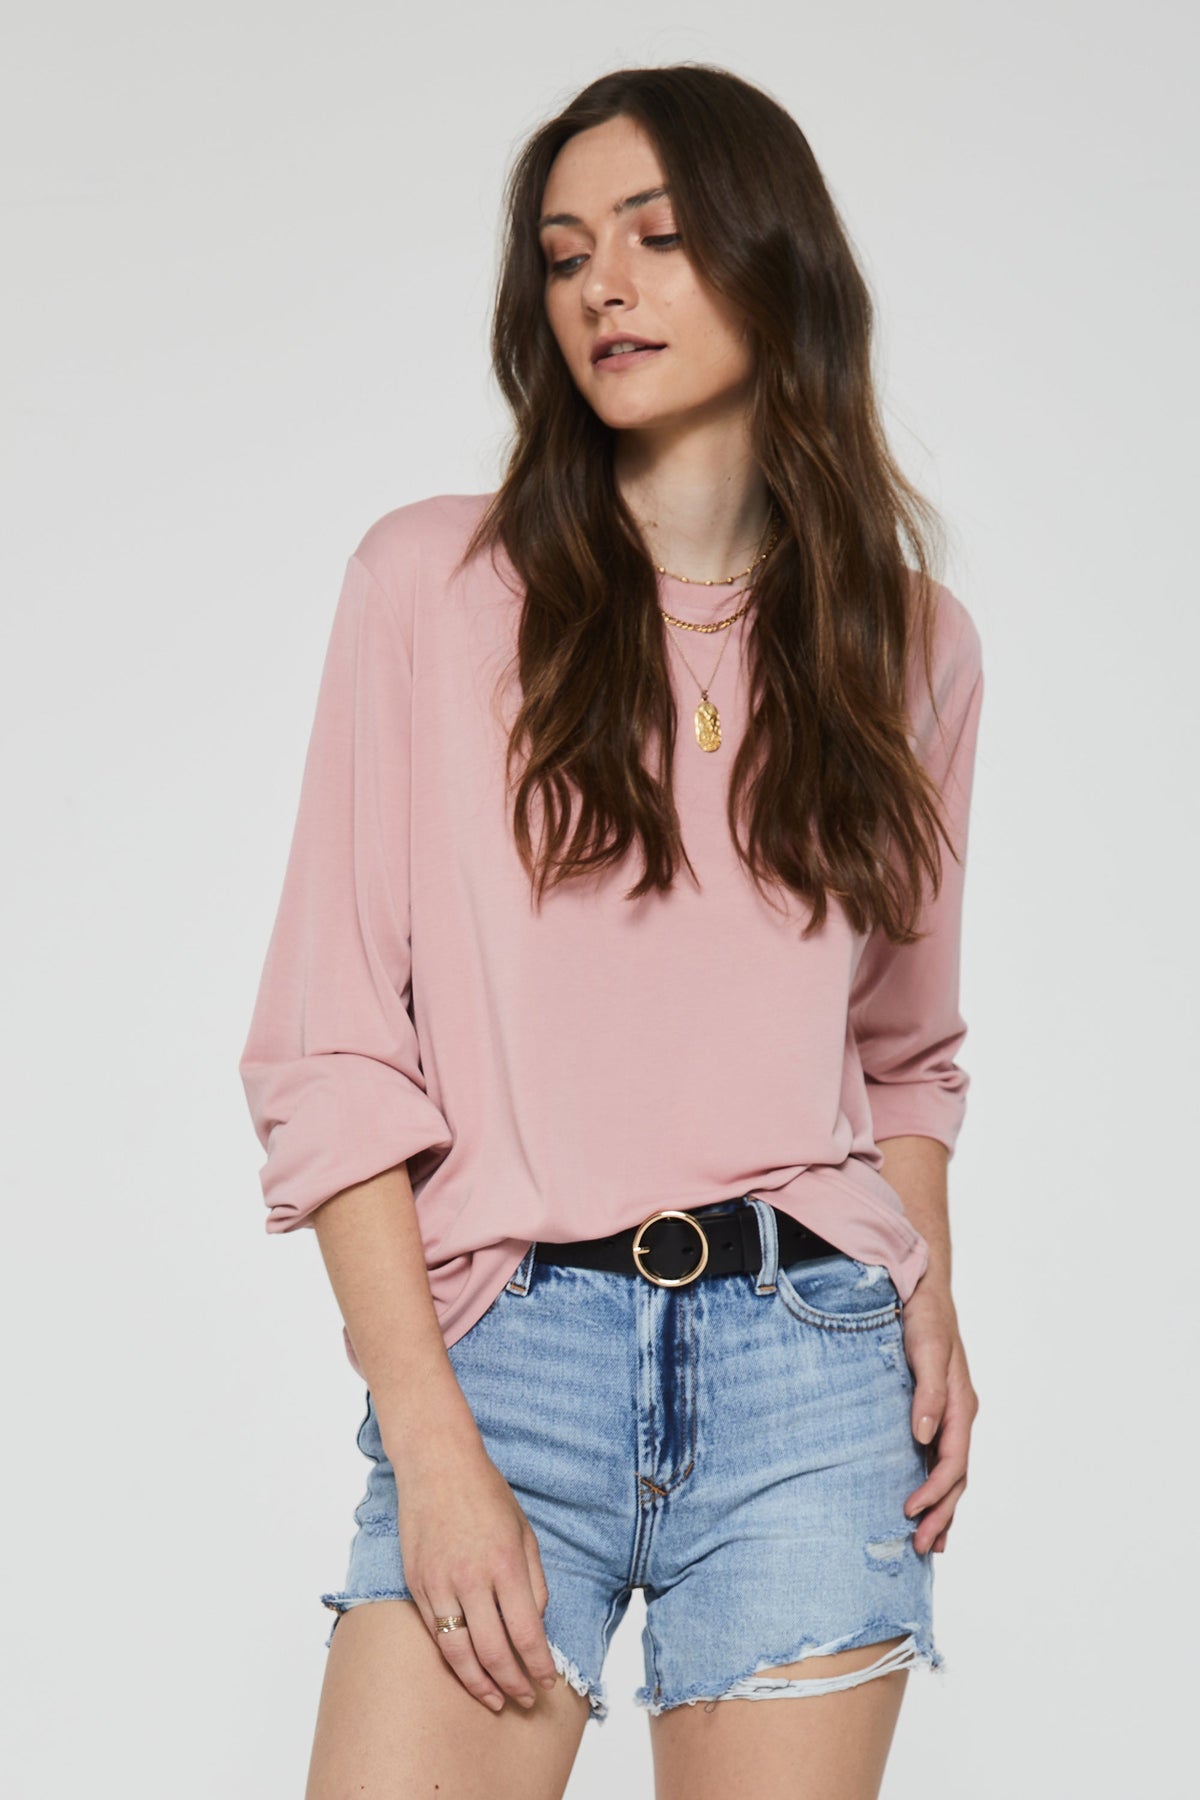 matilda-basic-long-sleeve-top-rose-quartz-front-image-another-love-clothing